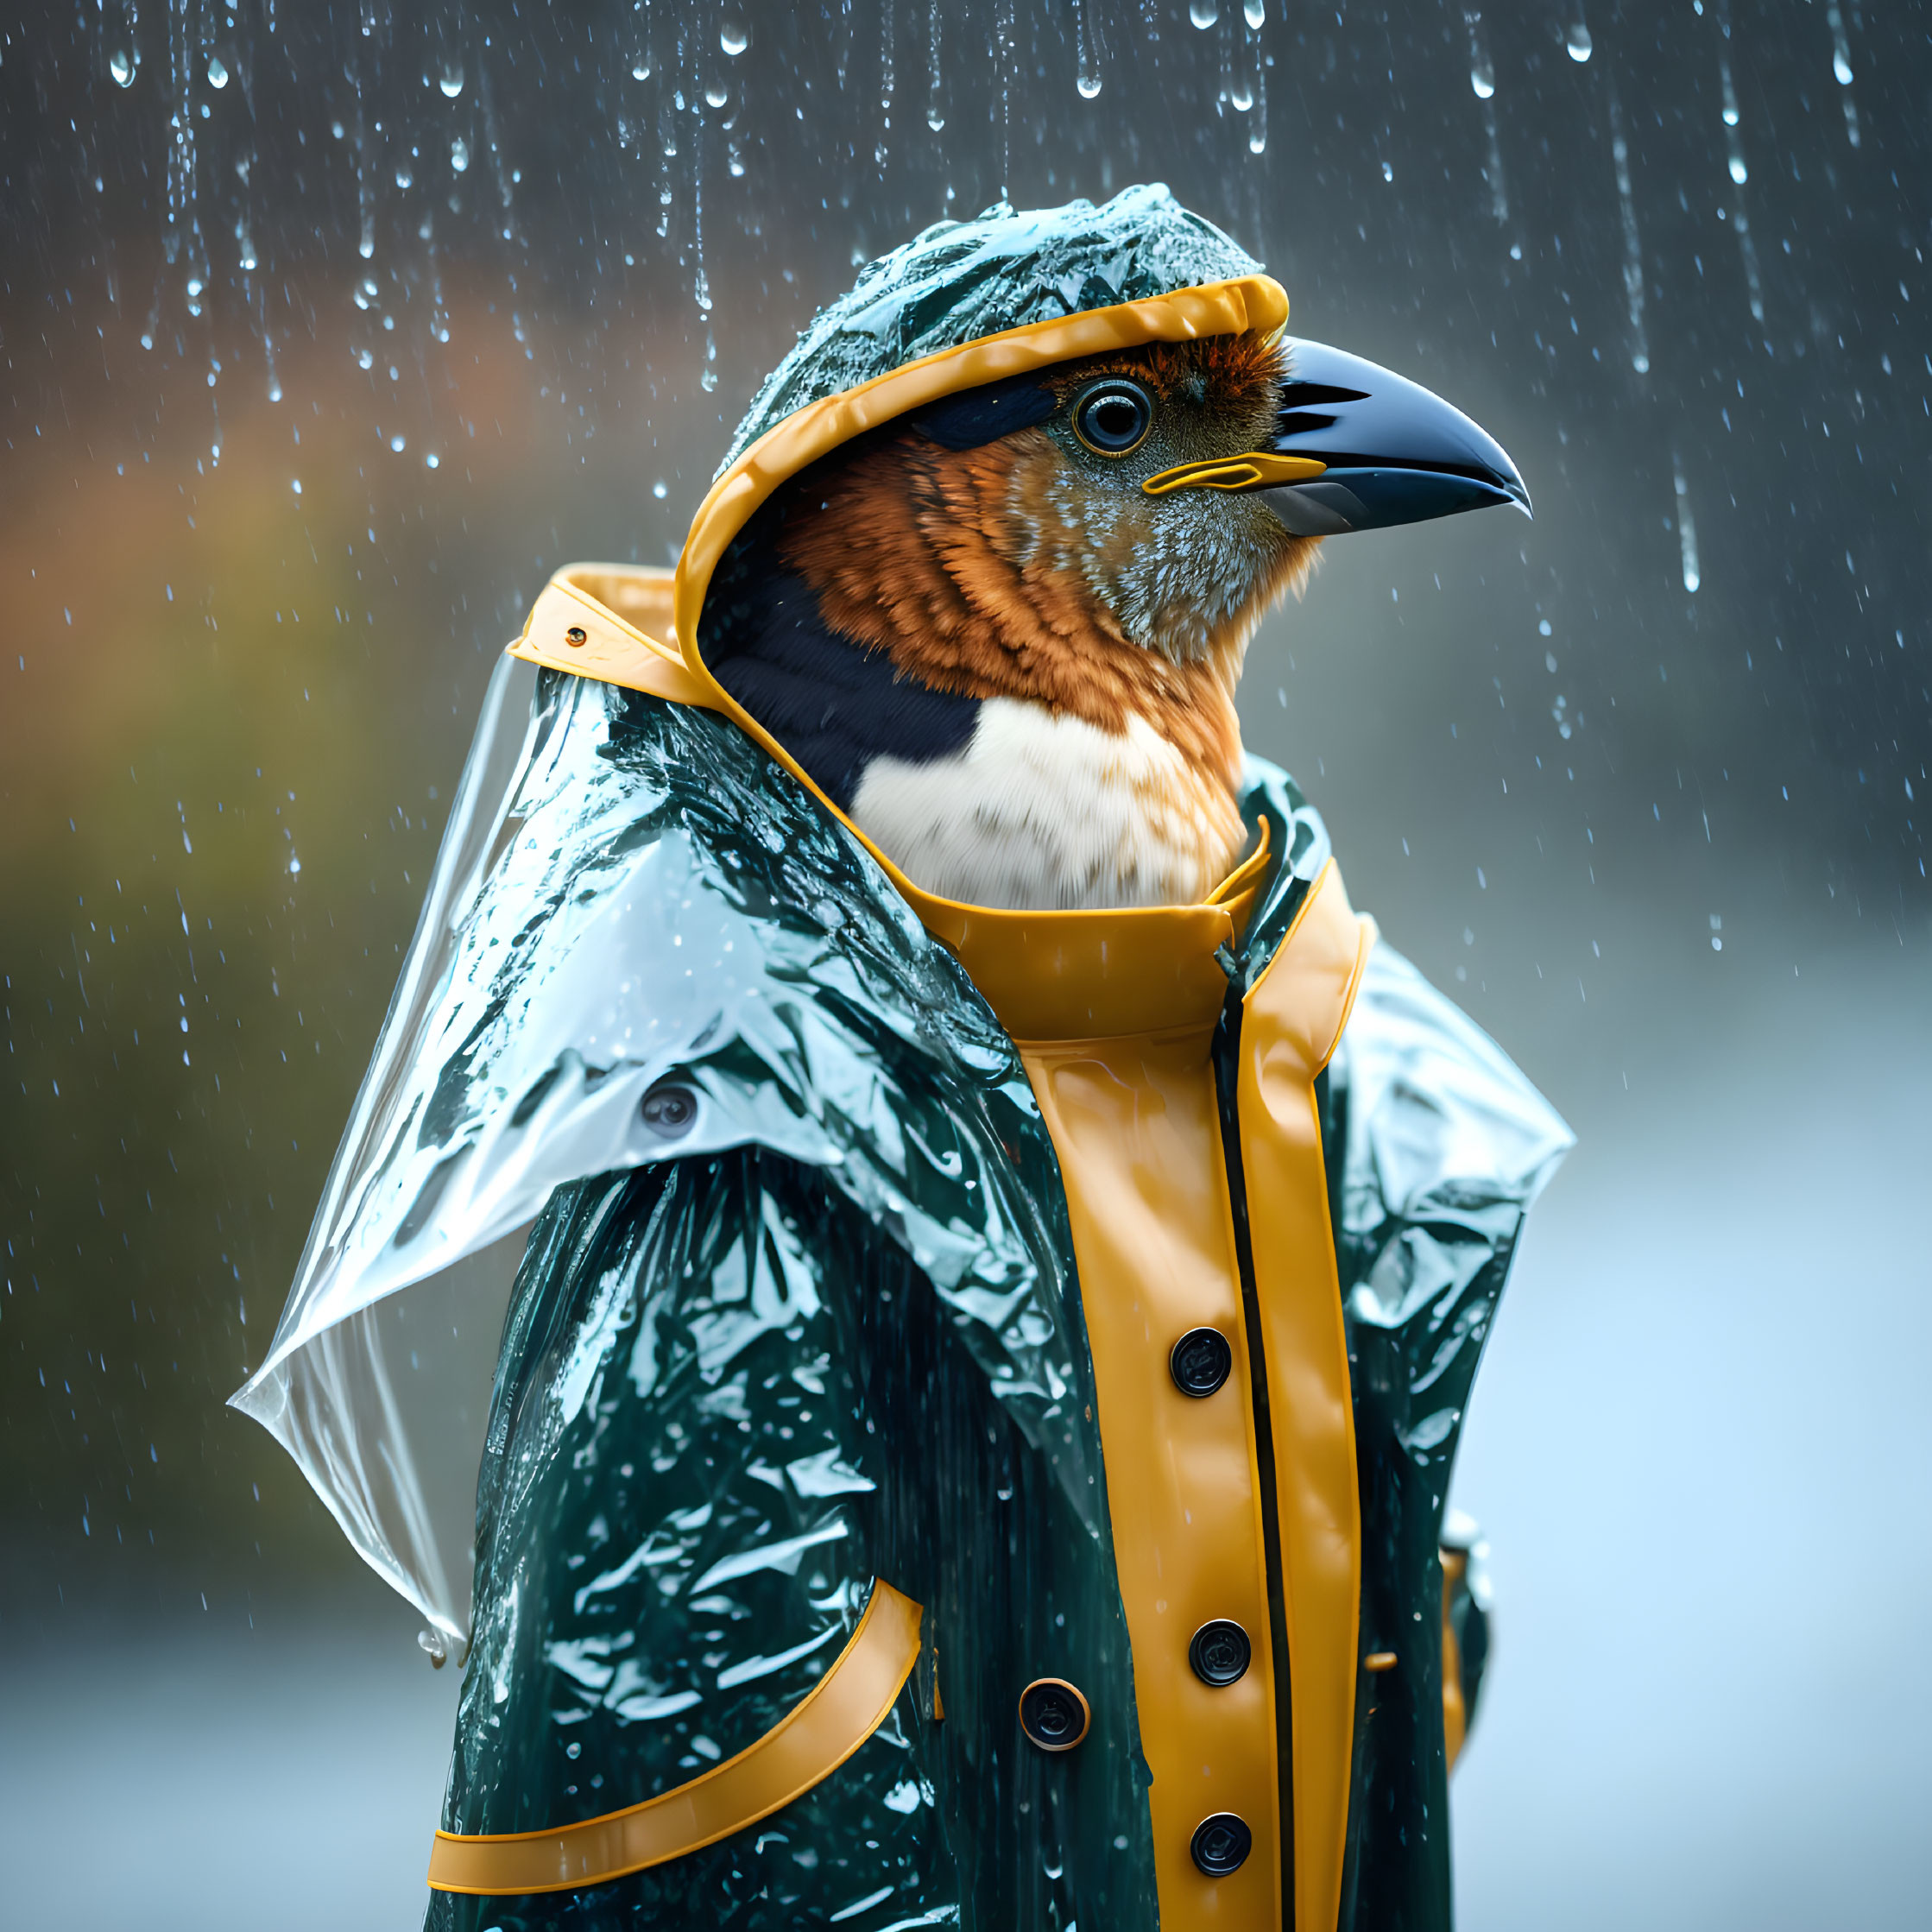 Bird with human body in yellow raincoat standing in rain